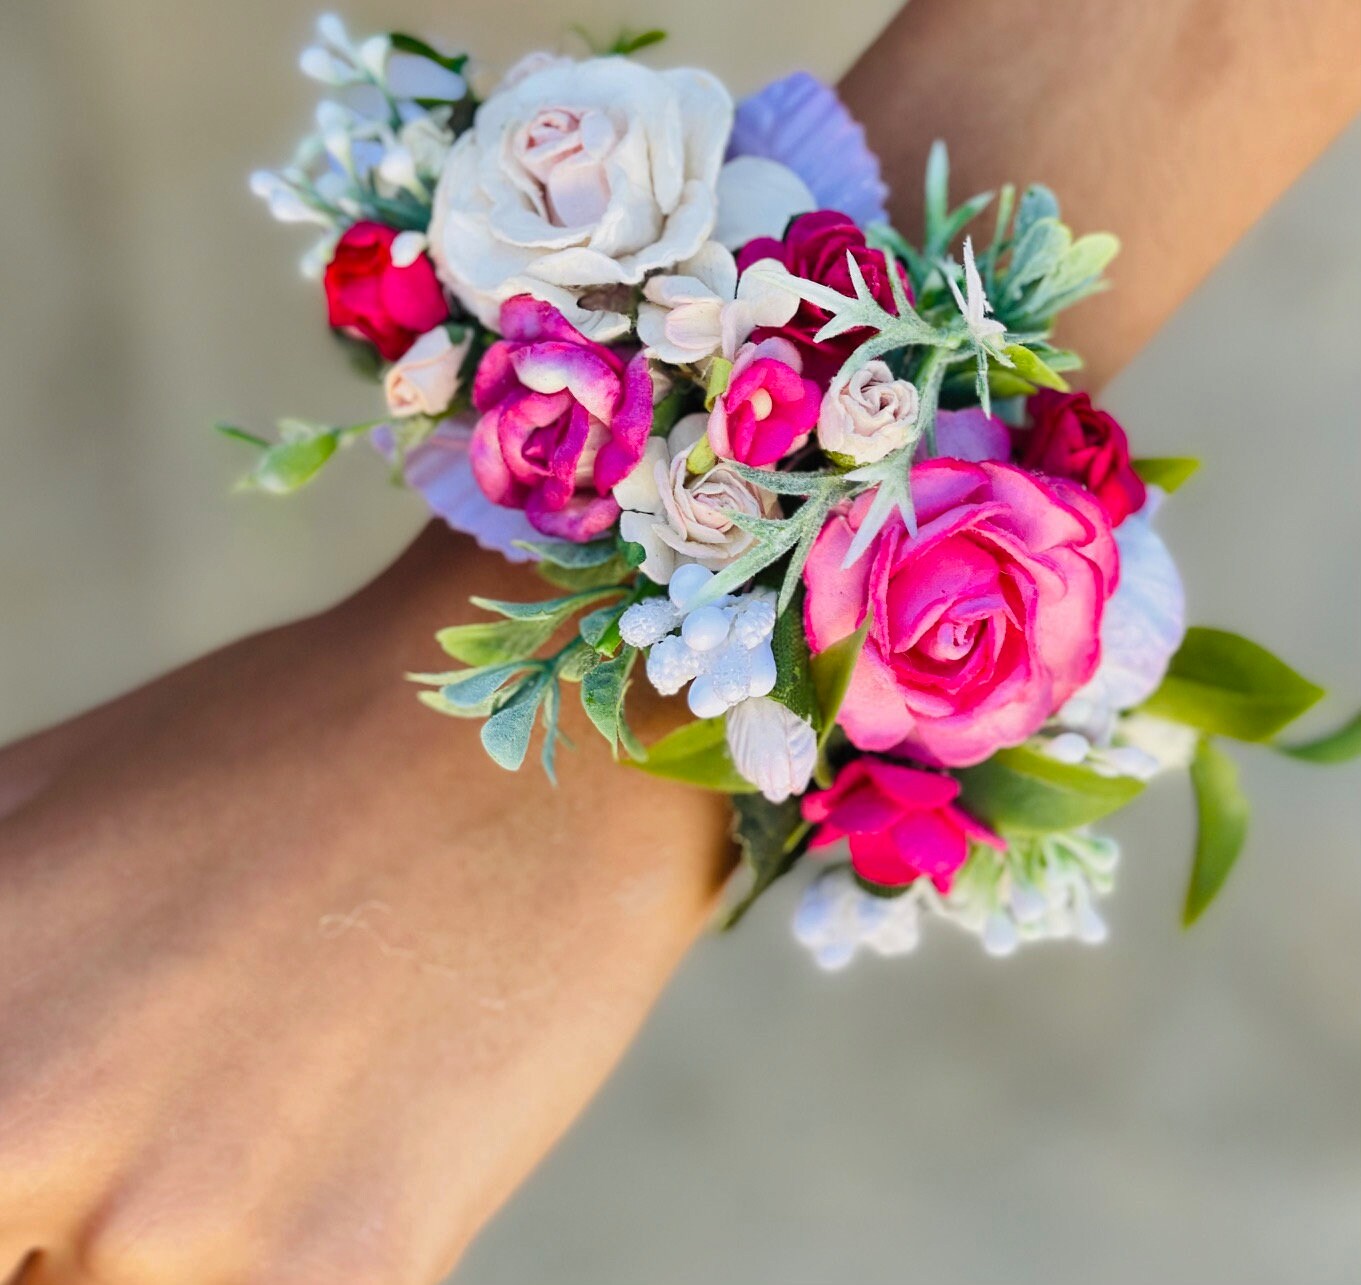 Dry wrist flowers│bride wrist flowers│bridesmaid wrist flowers│wedding  accessories│customized